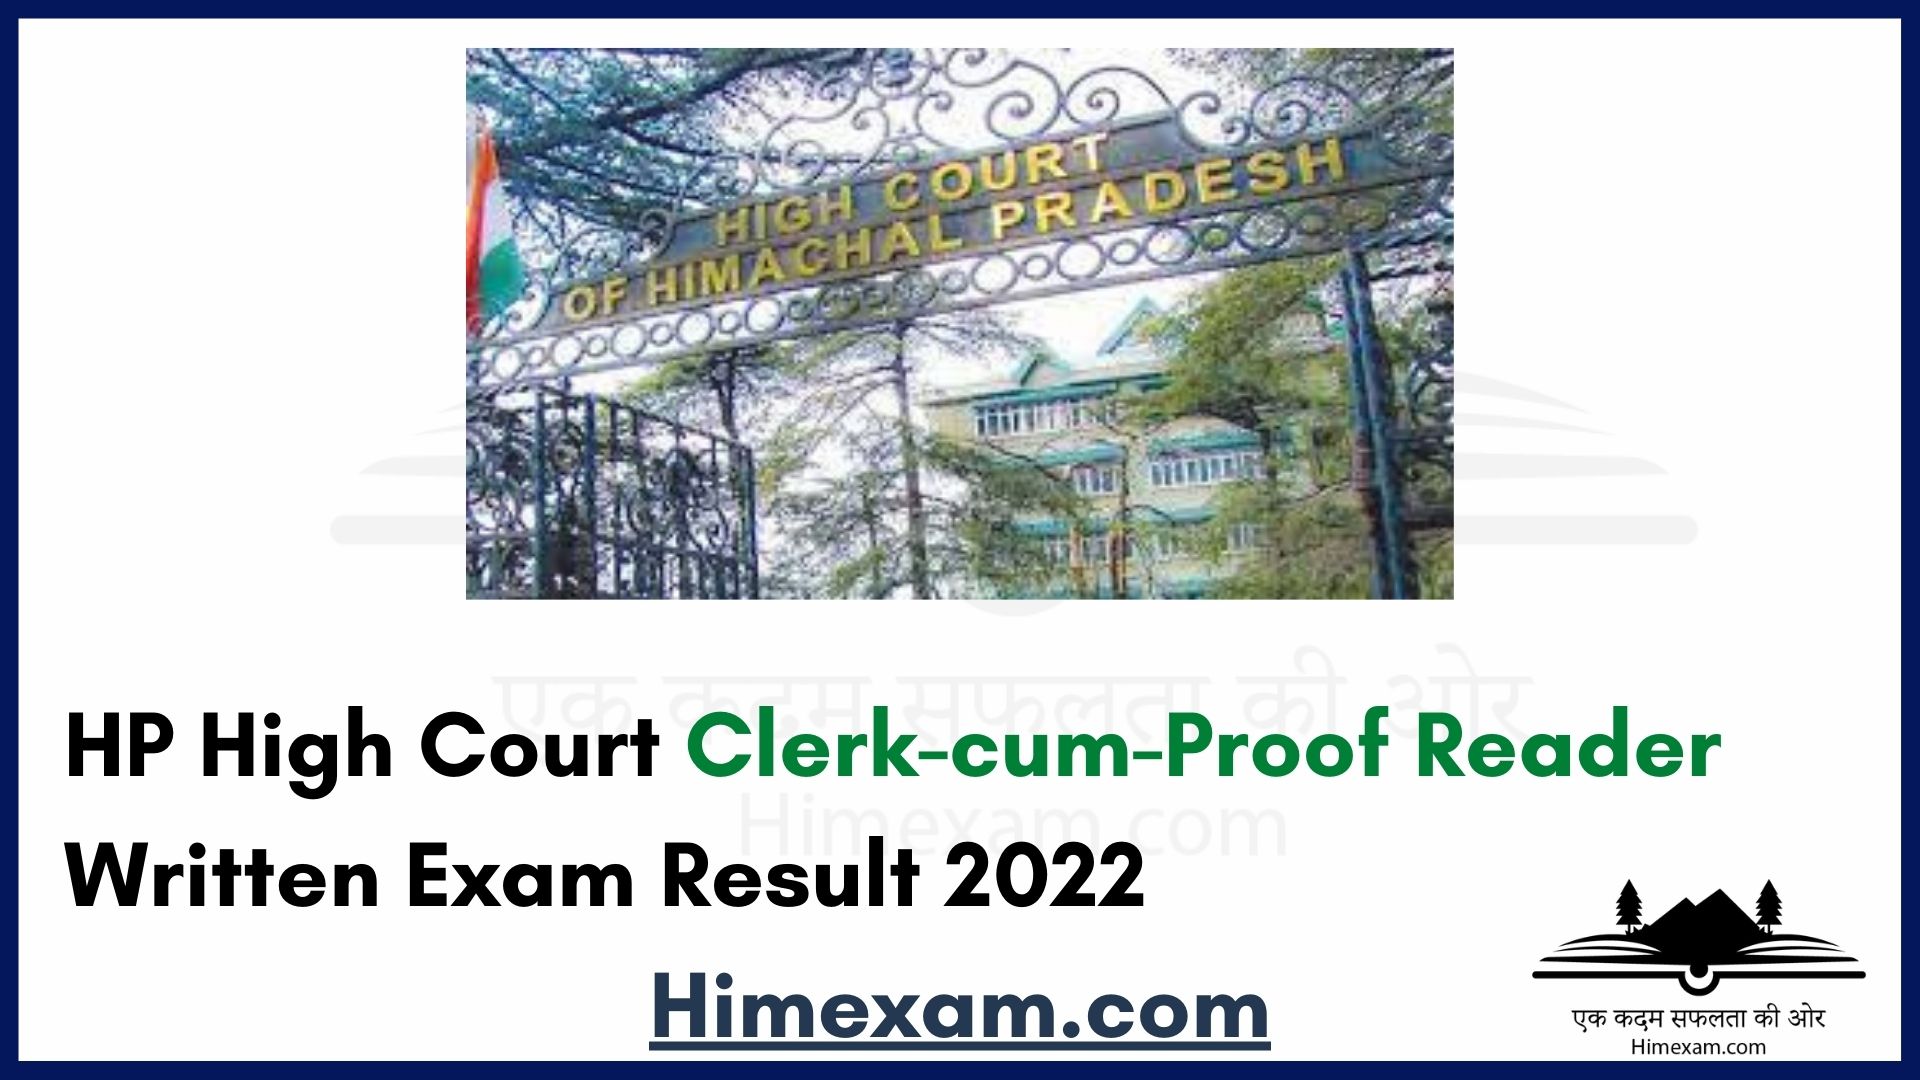 HP High Court Clerk-cum-Proof Reader Written Exam Result 2022